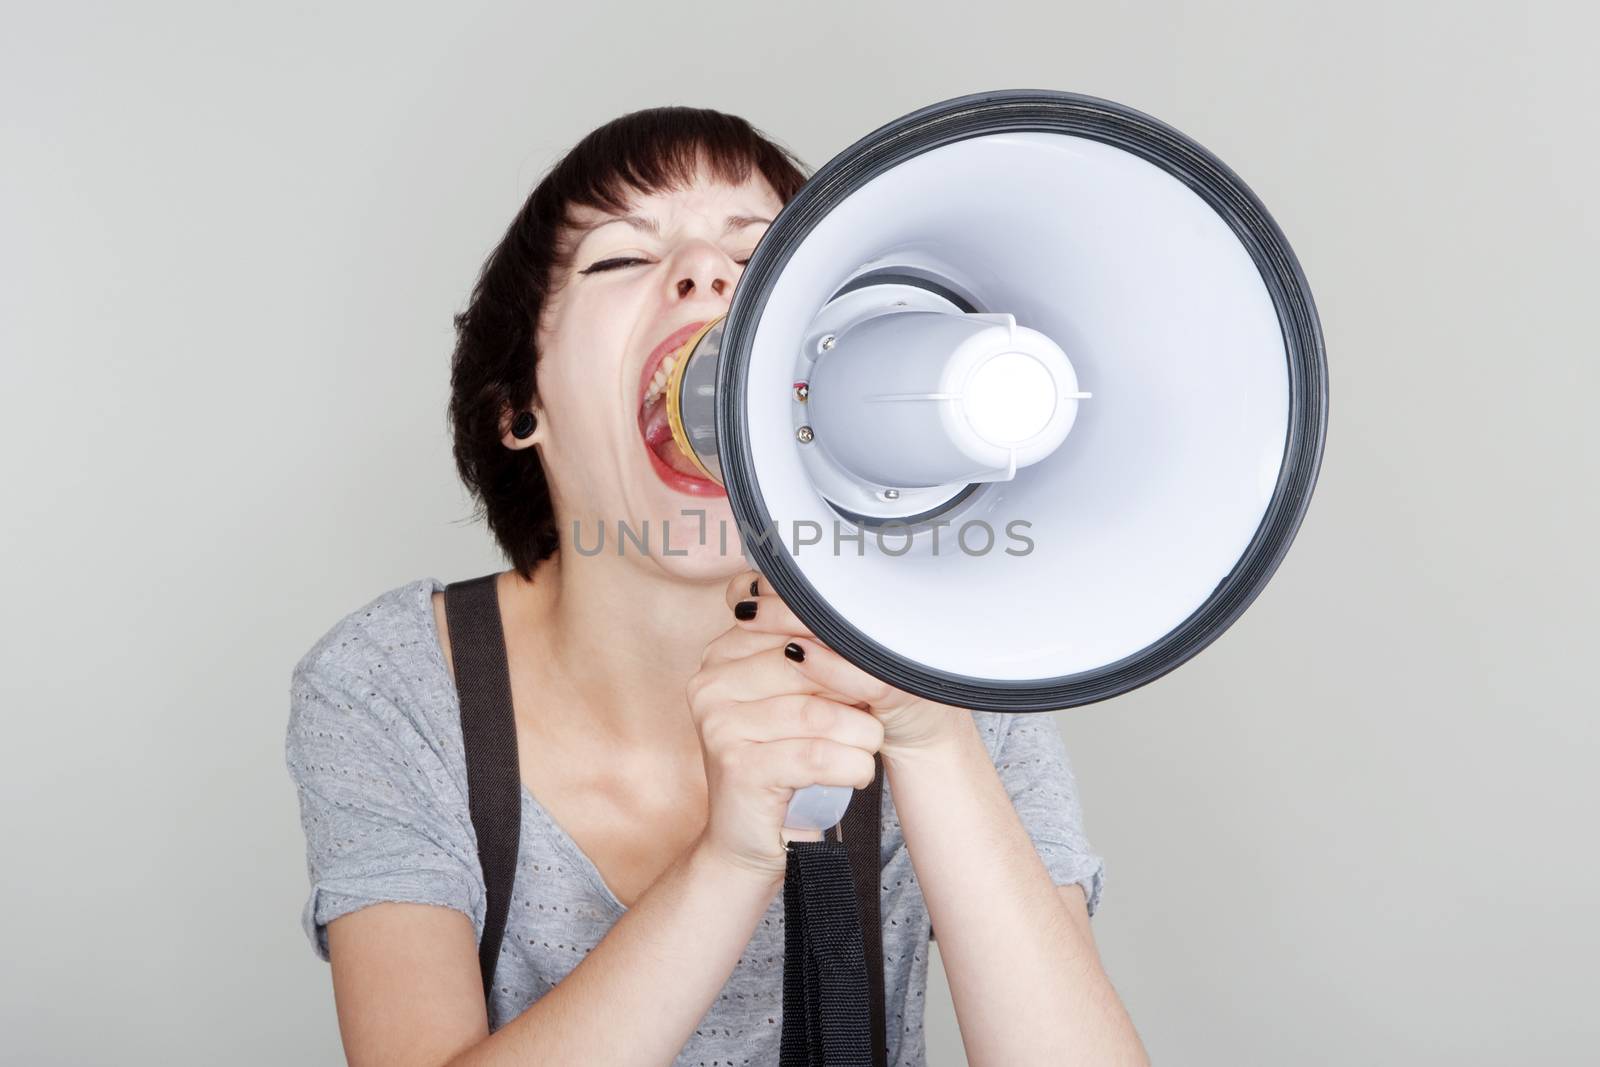 angry teenage girl yelling into a megaphone - isolated on gray